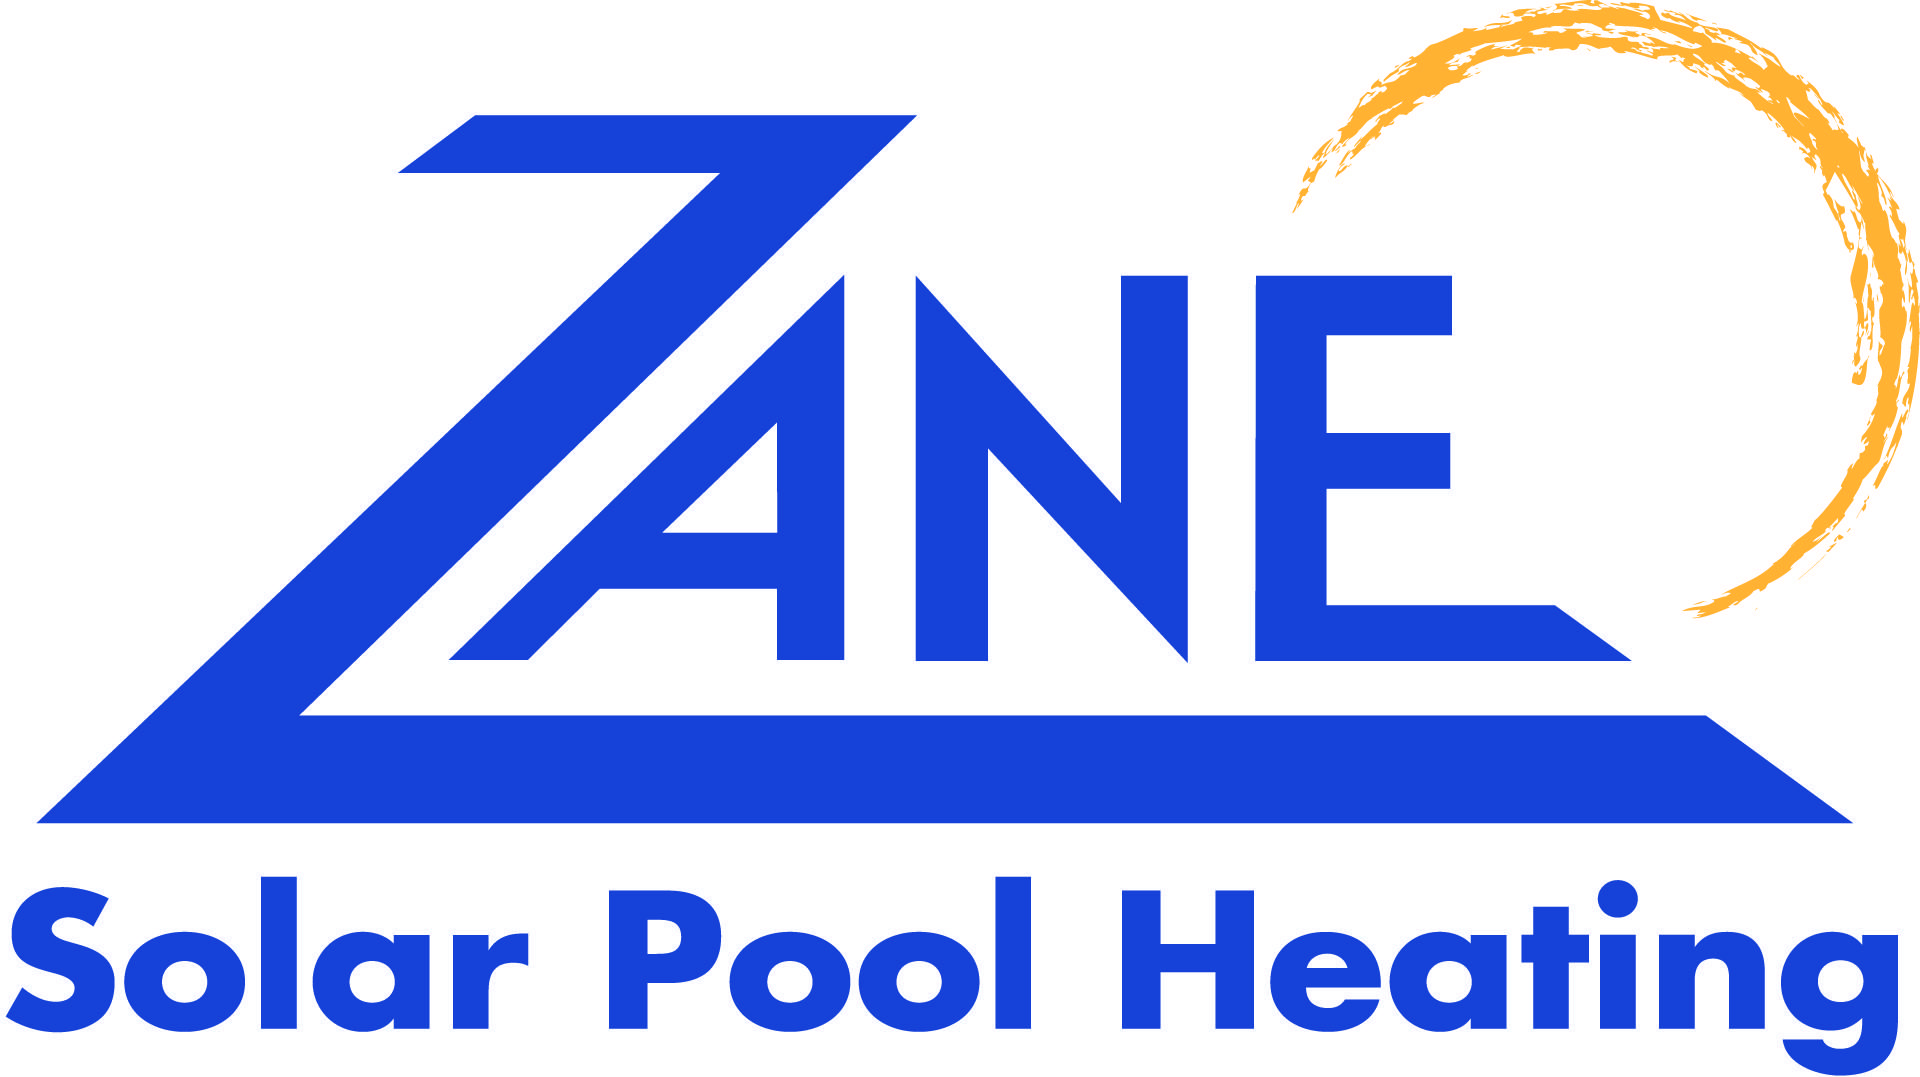 Zane Logo - Solar Pool Heating, Pool Heat Pumps, Gas Pool Heating, Pool Covers